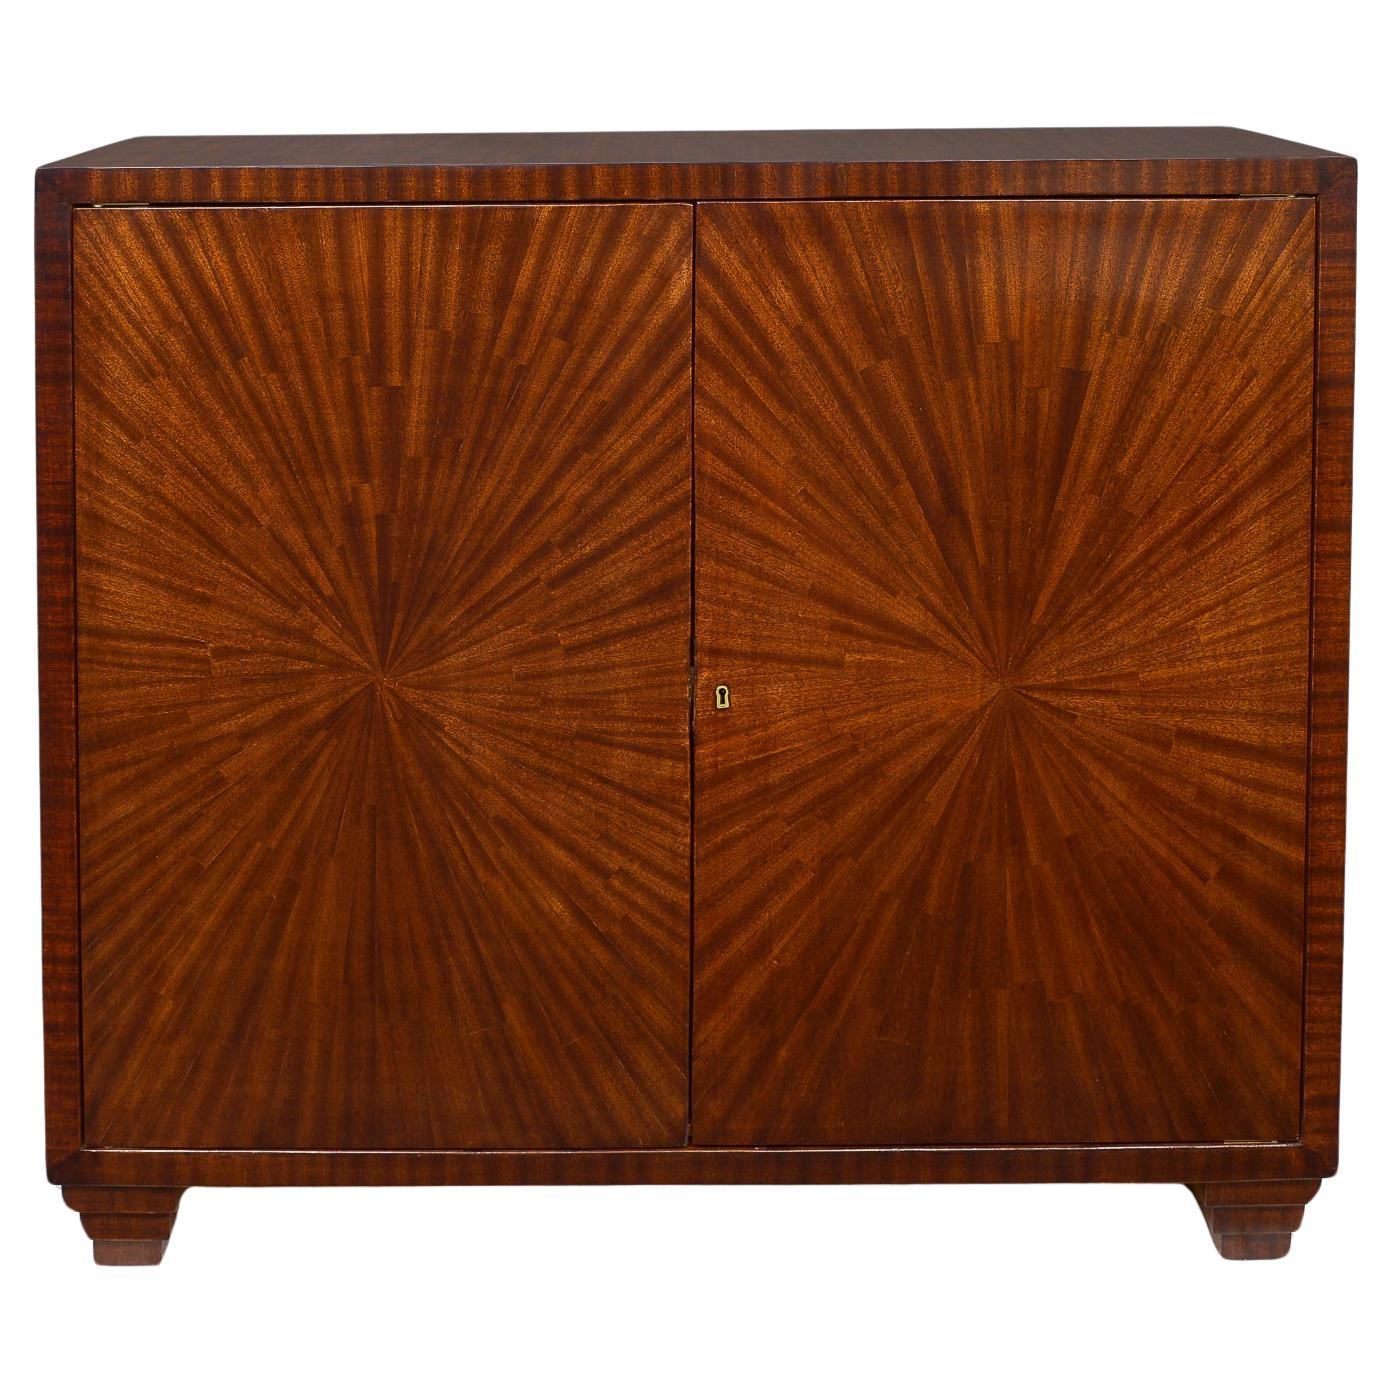 Exquisite Parquetry Cabinet with Starburst Pattern